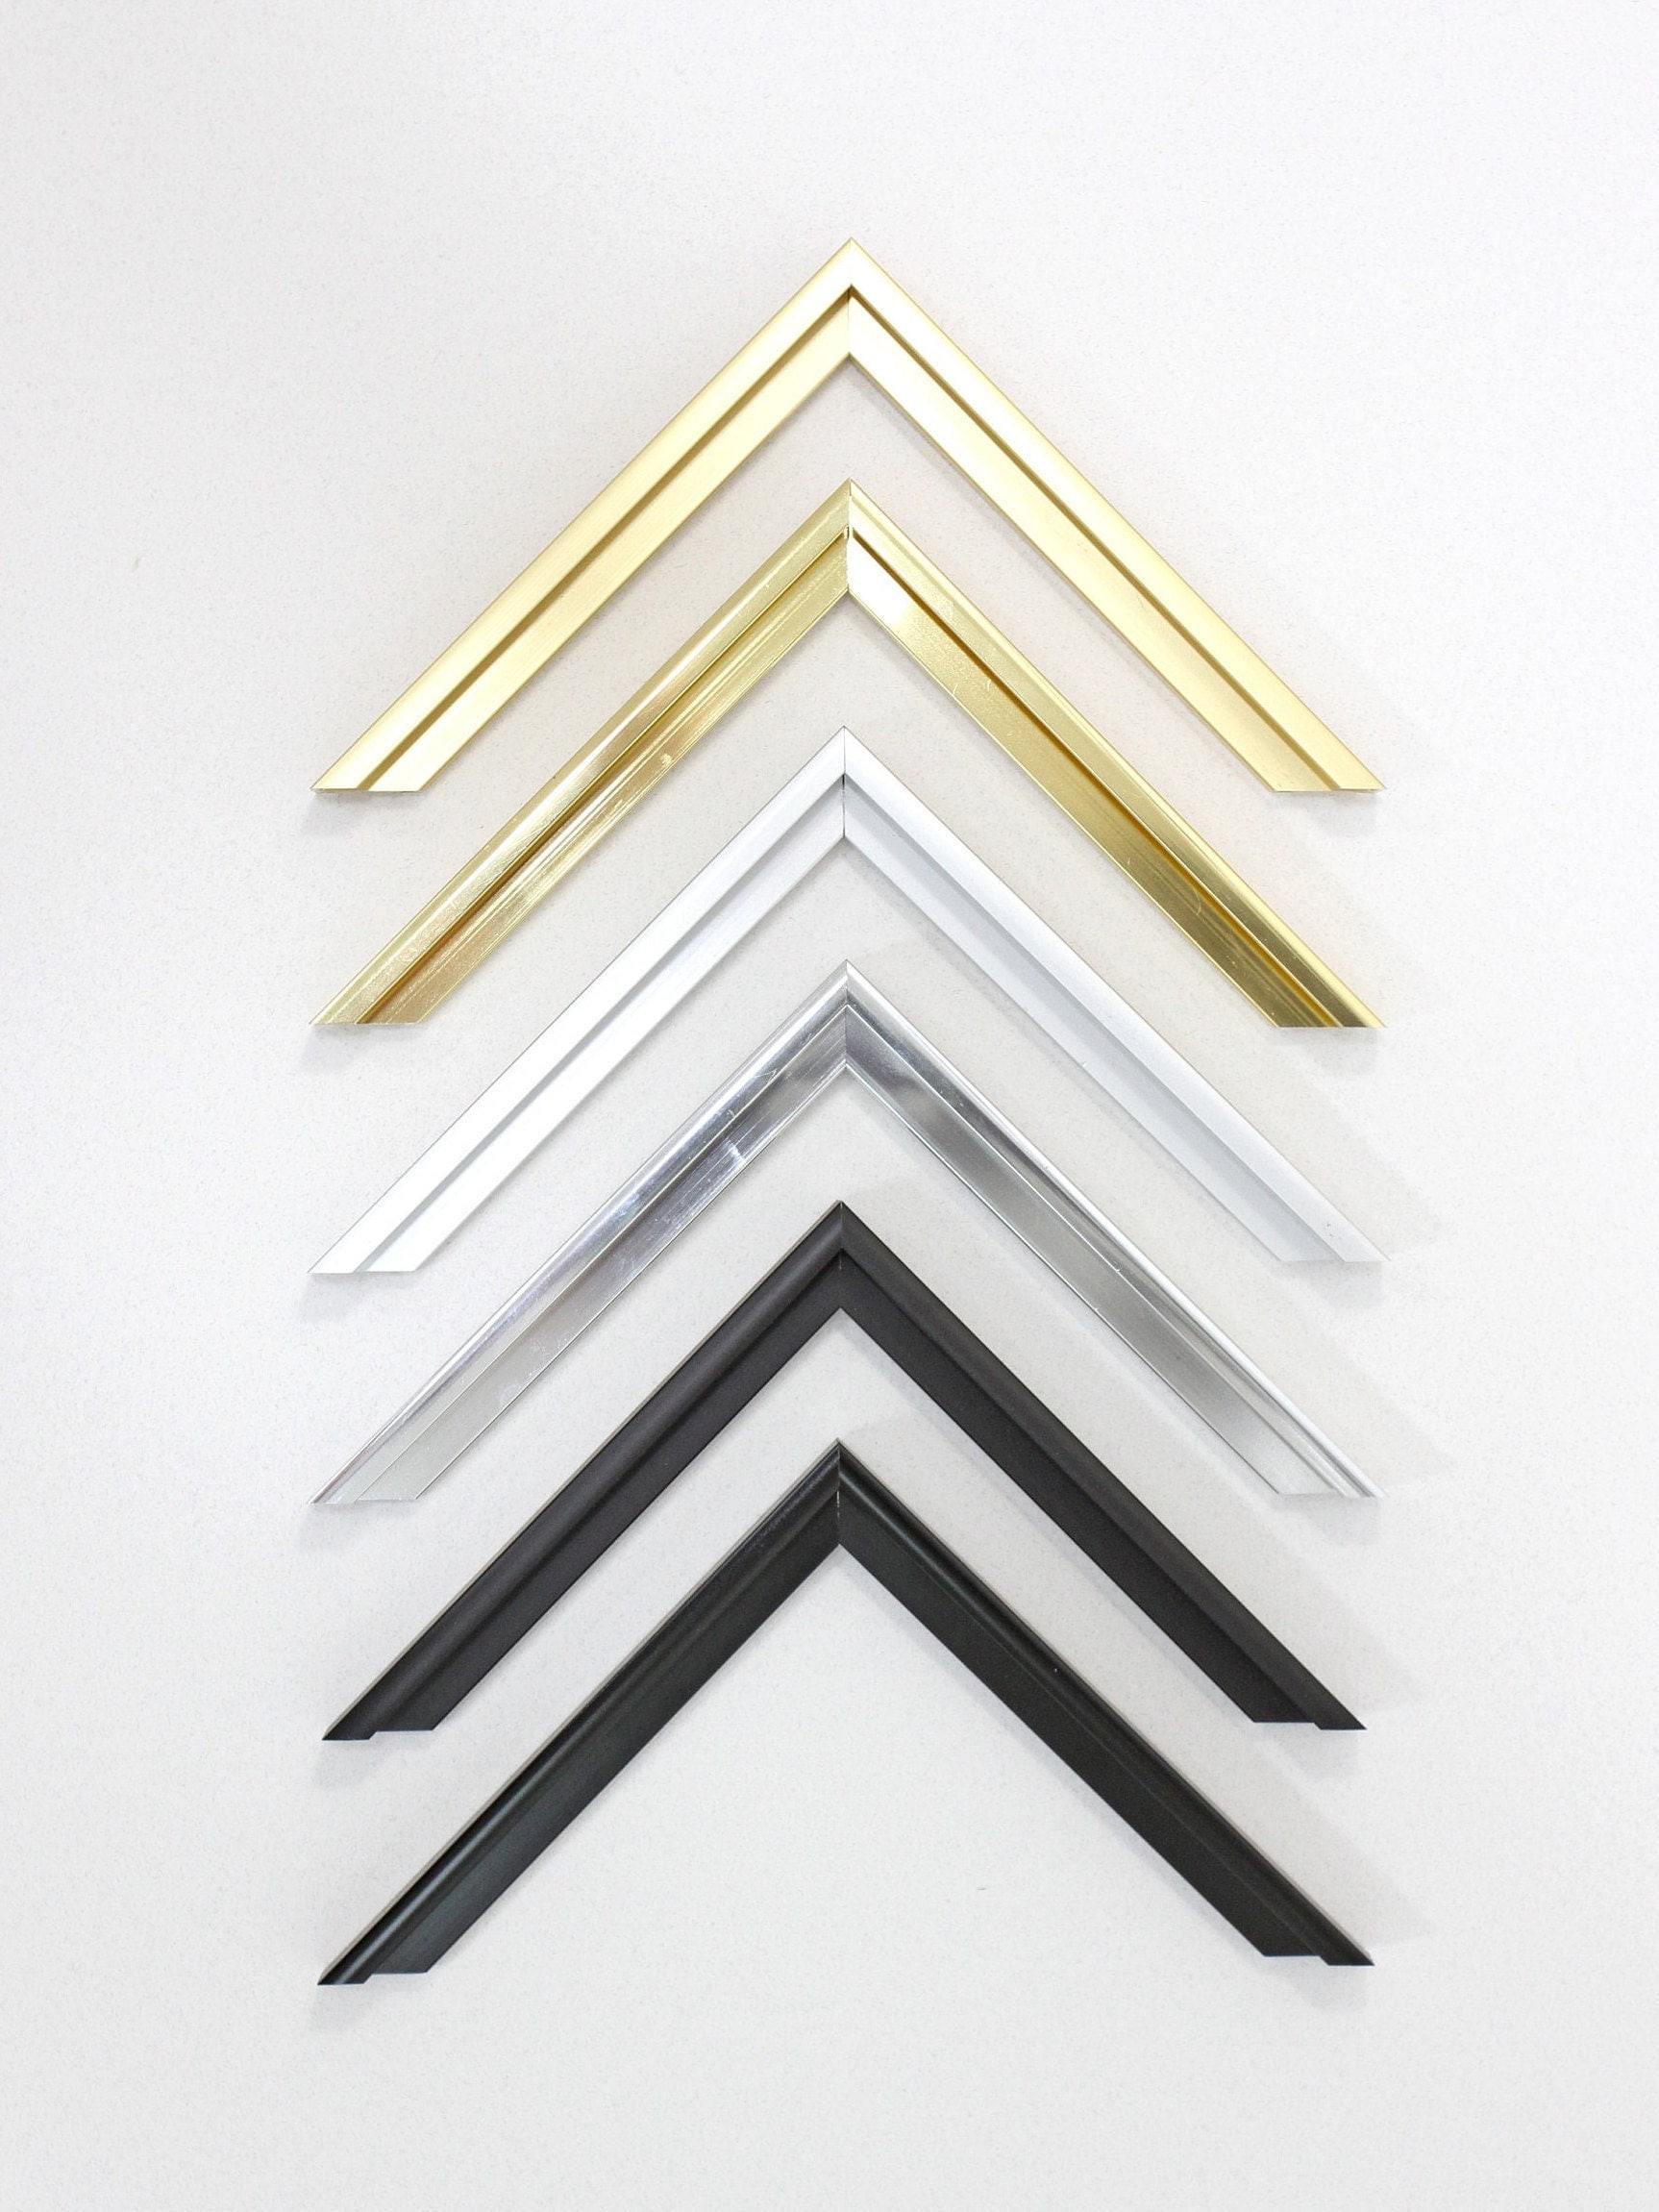 30x40 Frame Aluminum / Inches / Colors: Black, White, Graphite, Silver,  Gold Antireflective Nonreflective Size 40x30 30 X 40 Inch 